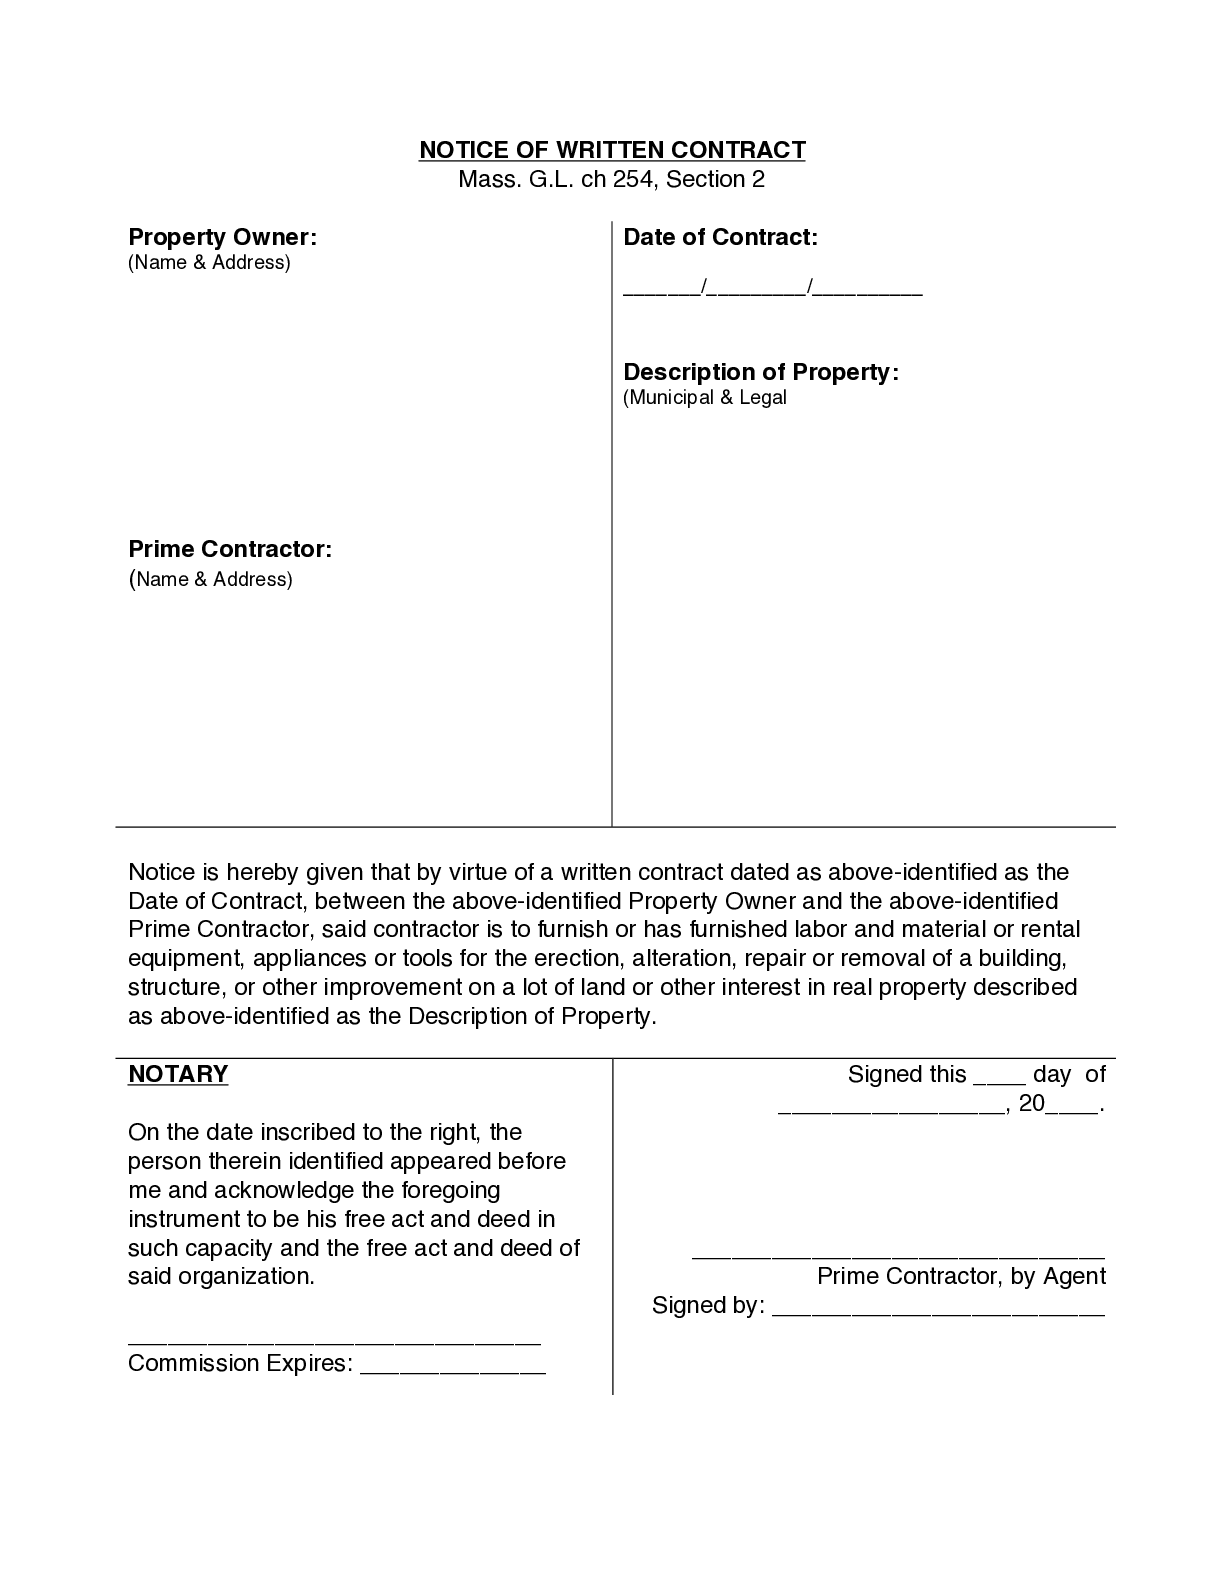 Massachusetts Notice of Written Contract Form